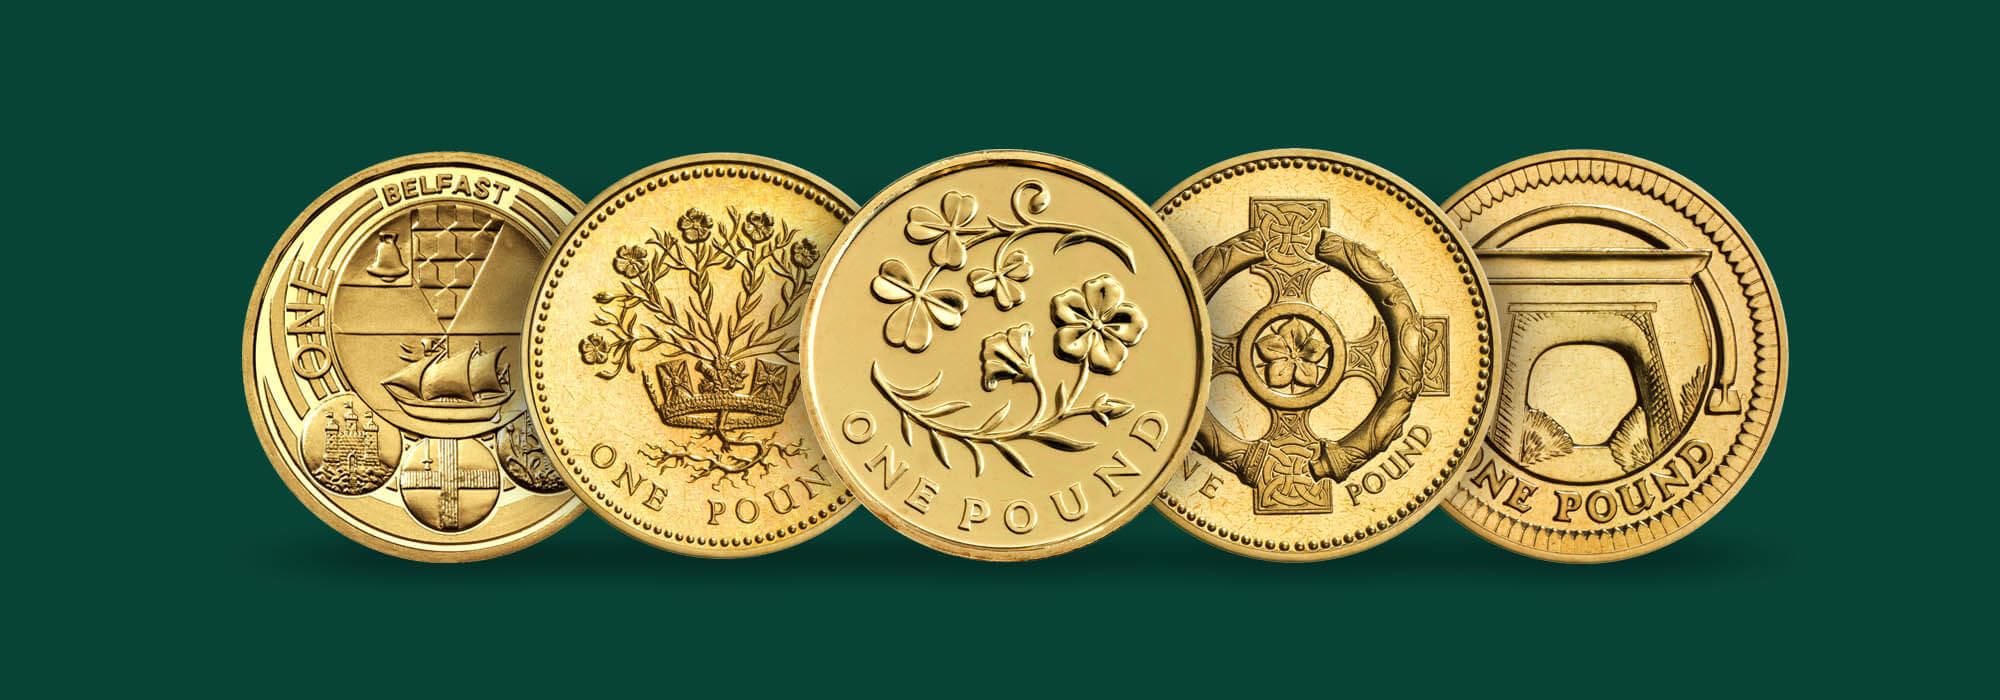 northern-irish-£1-coins-dp.jpg